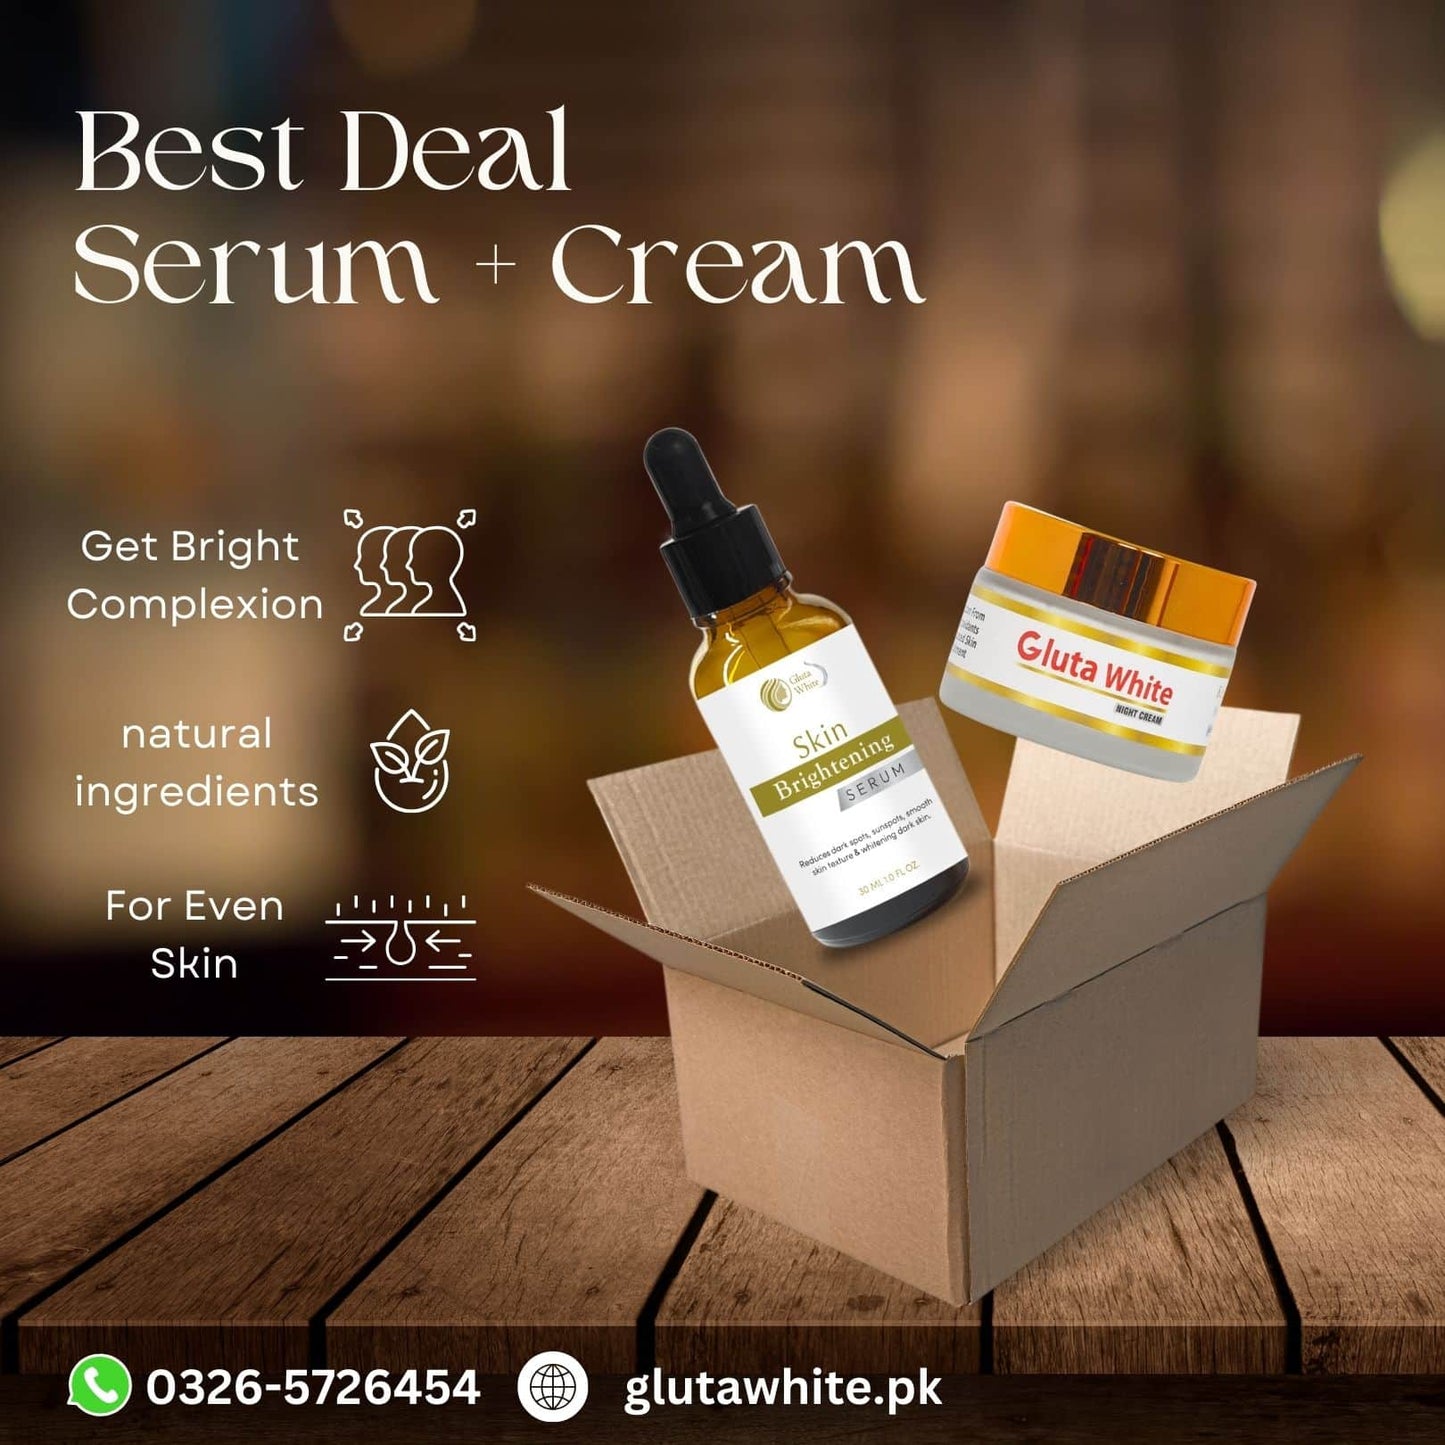 gluta white cream and serum